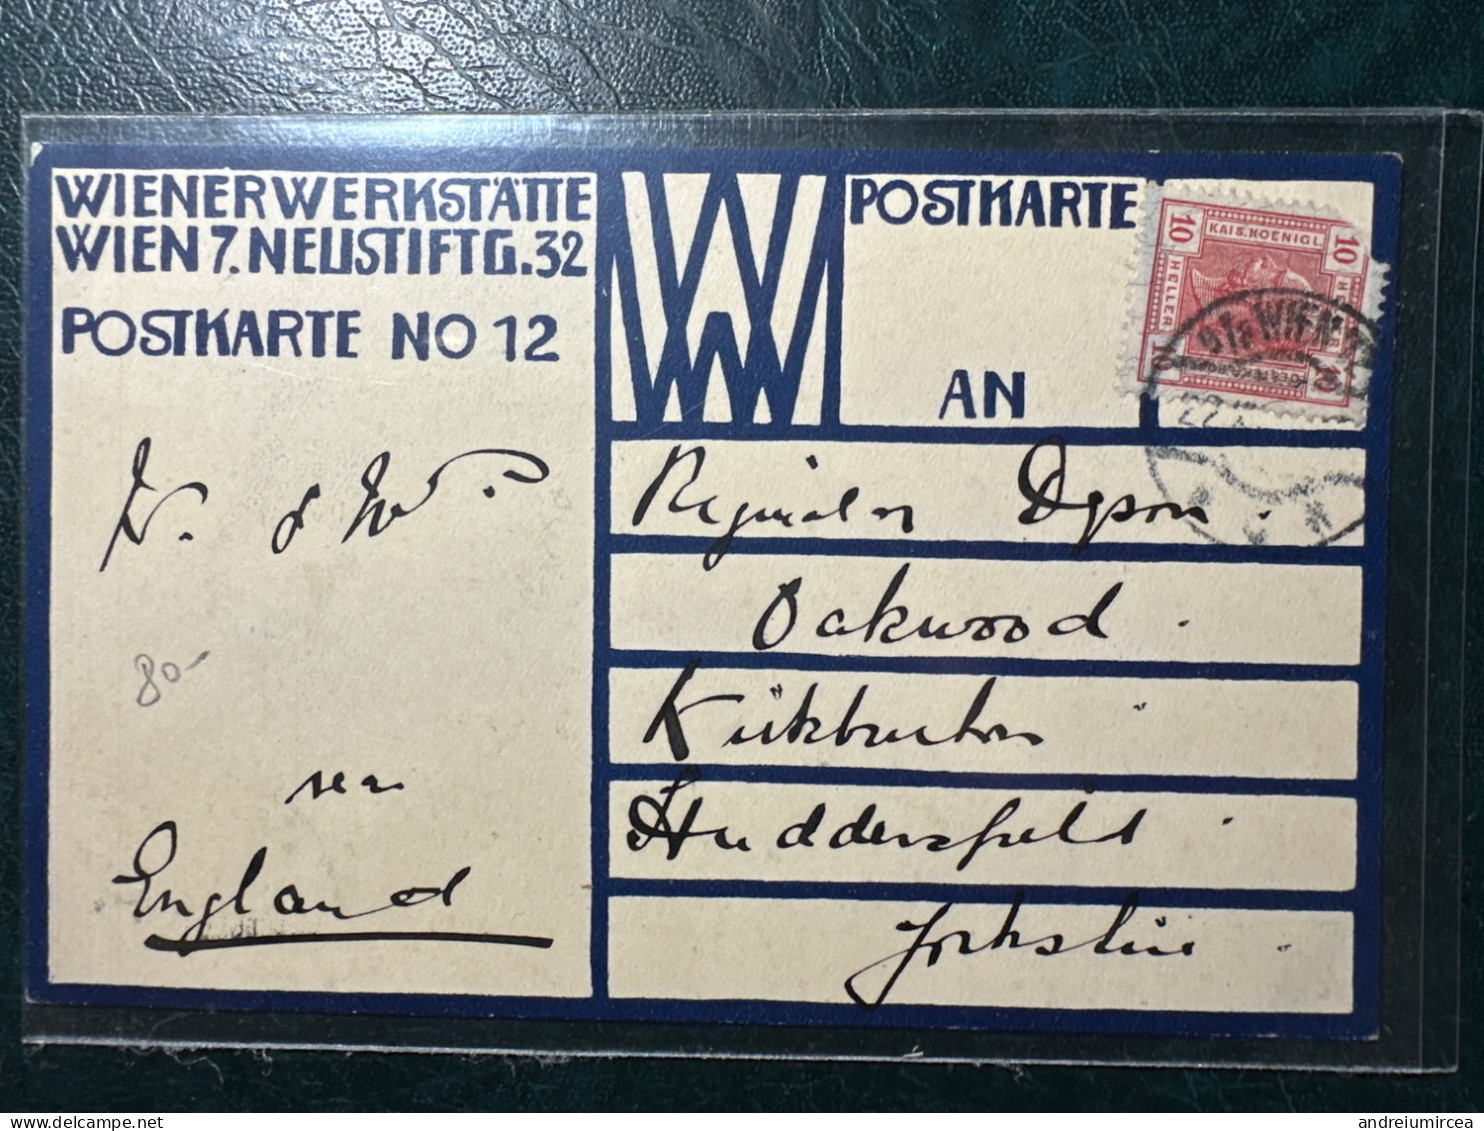 Postkarte No. 12 Sent From Wien To England - Wiener Werkstätten